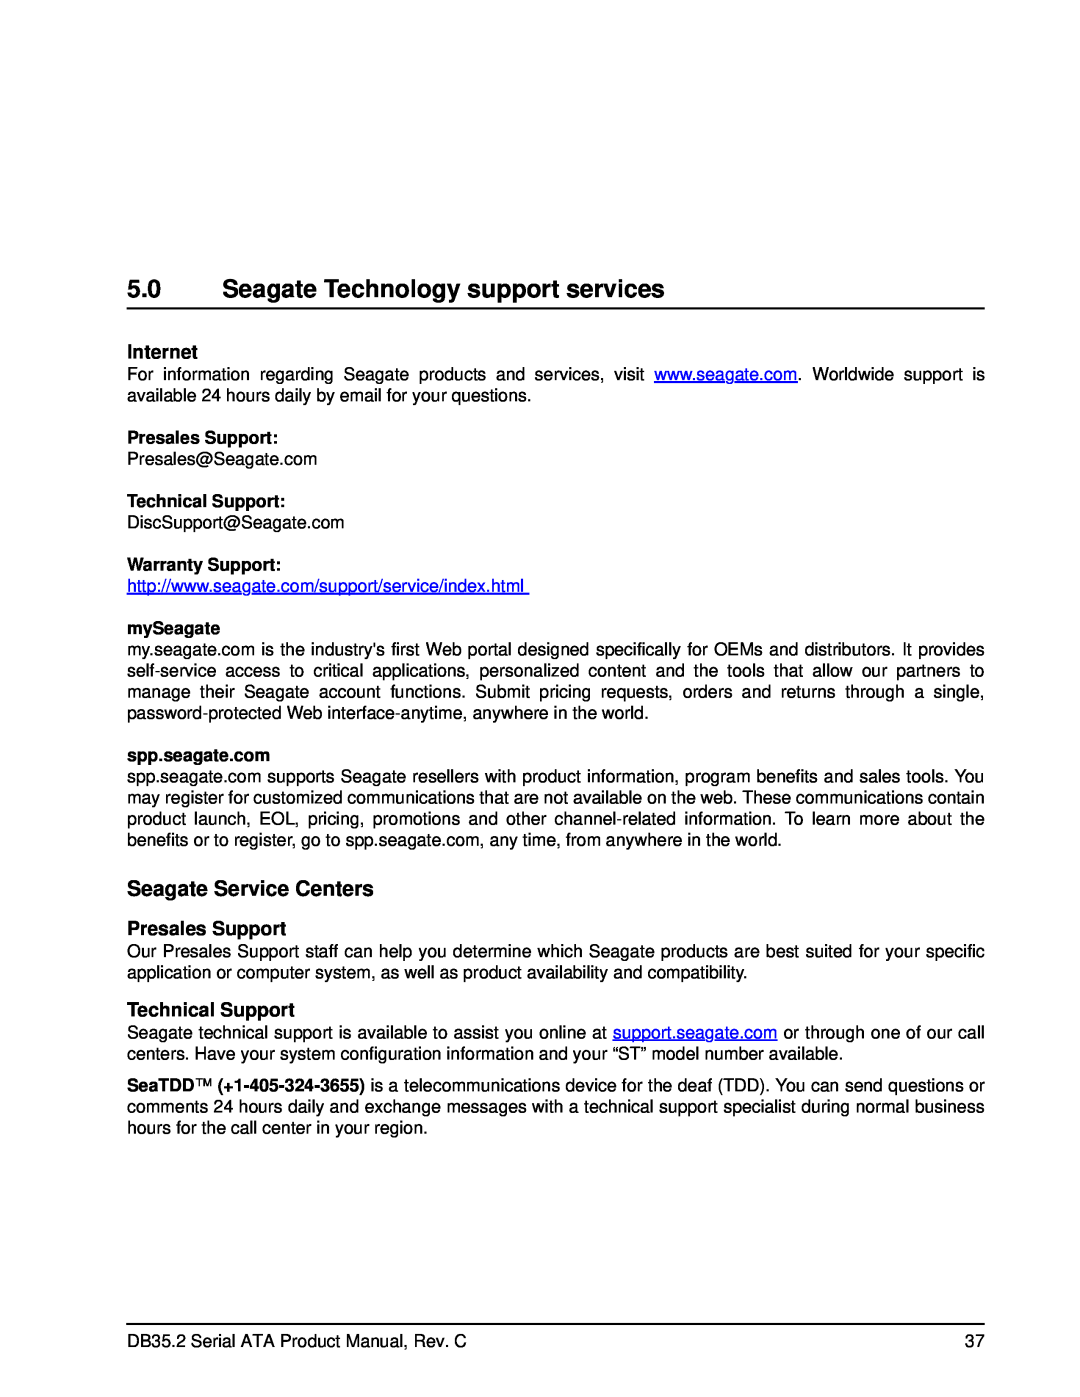 Seagate ST3200827SCE Seagate Technology support services, Seagate Service Centers, Internet, Presales Support, mySeagate 